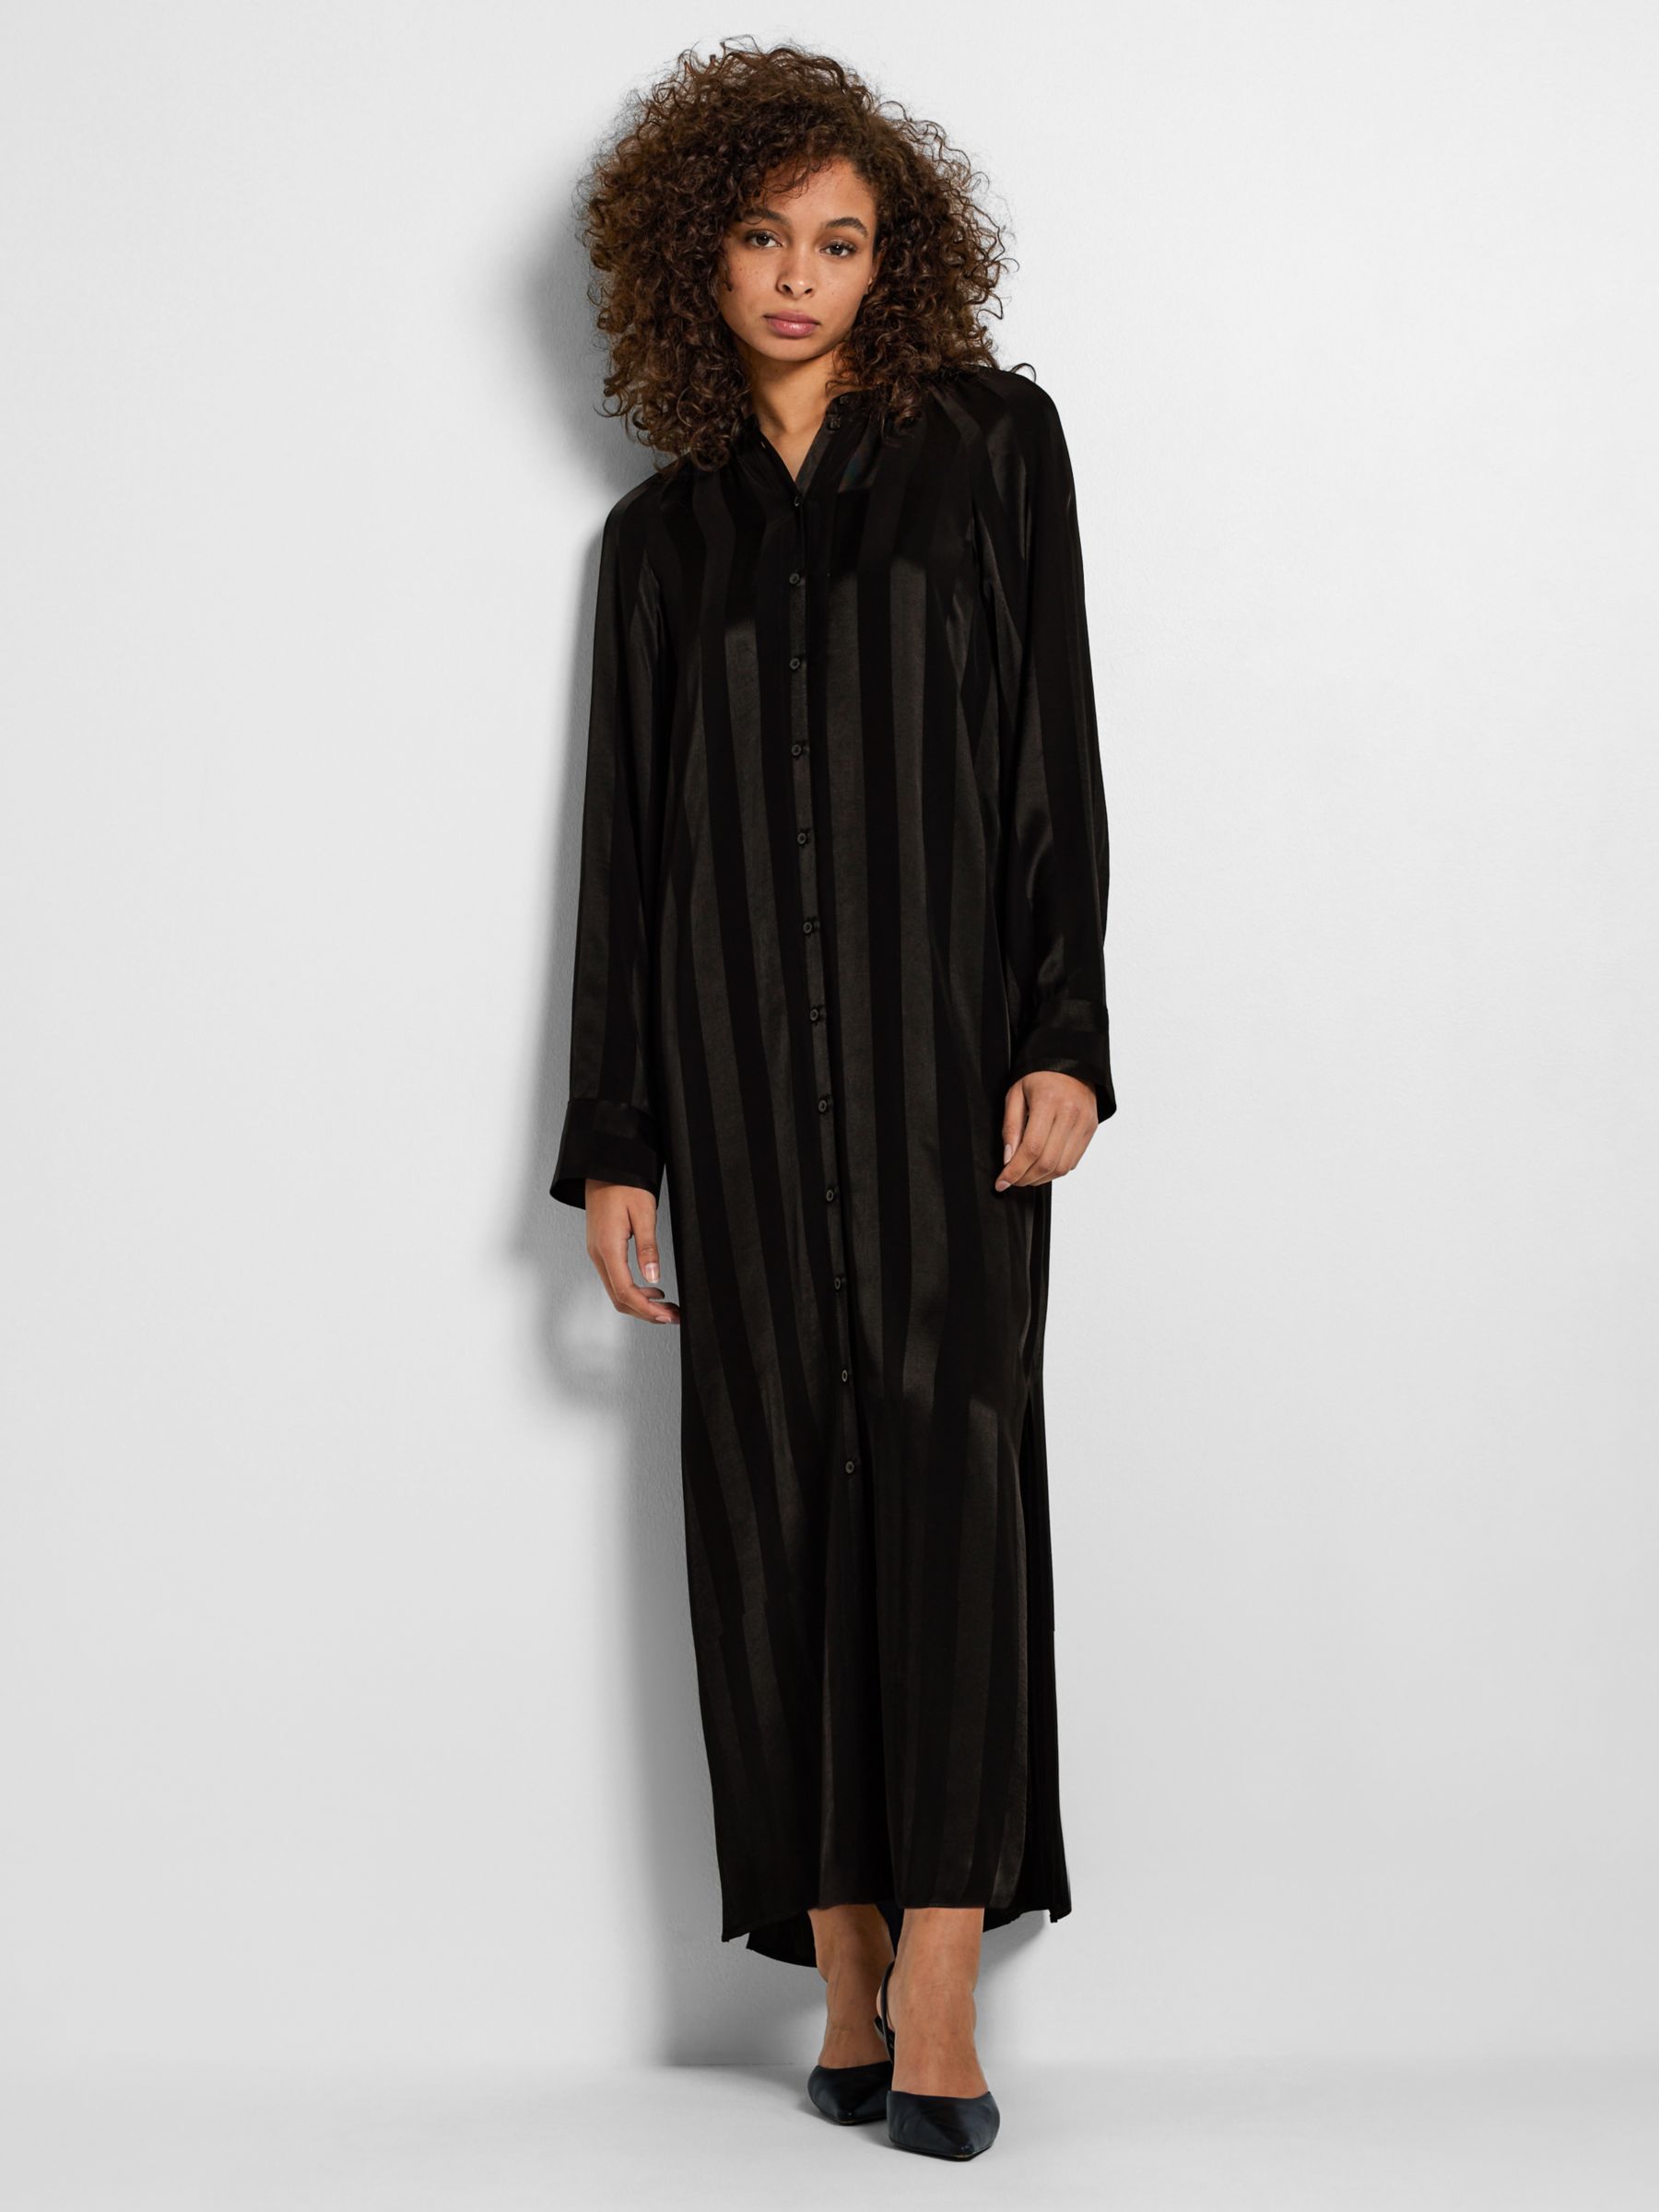 SELECTED FEMME Christel Maxi Shirt Dress, Black, 38